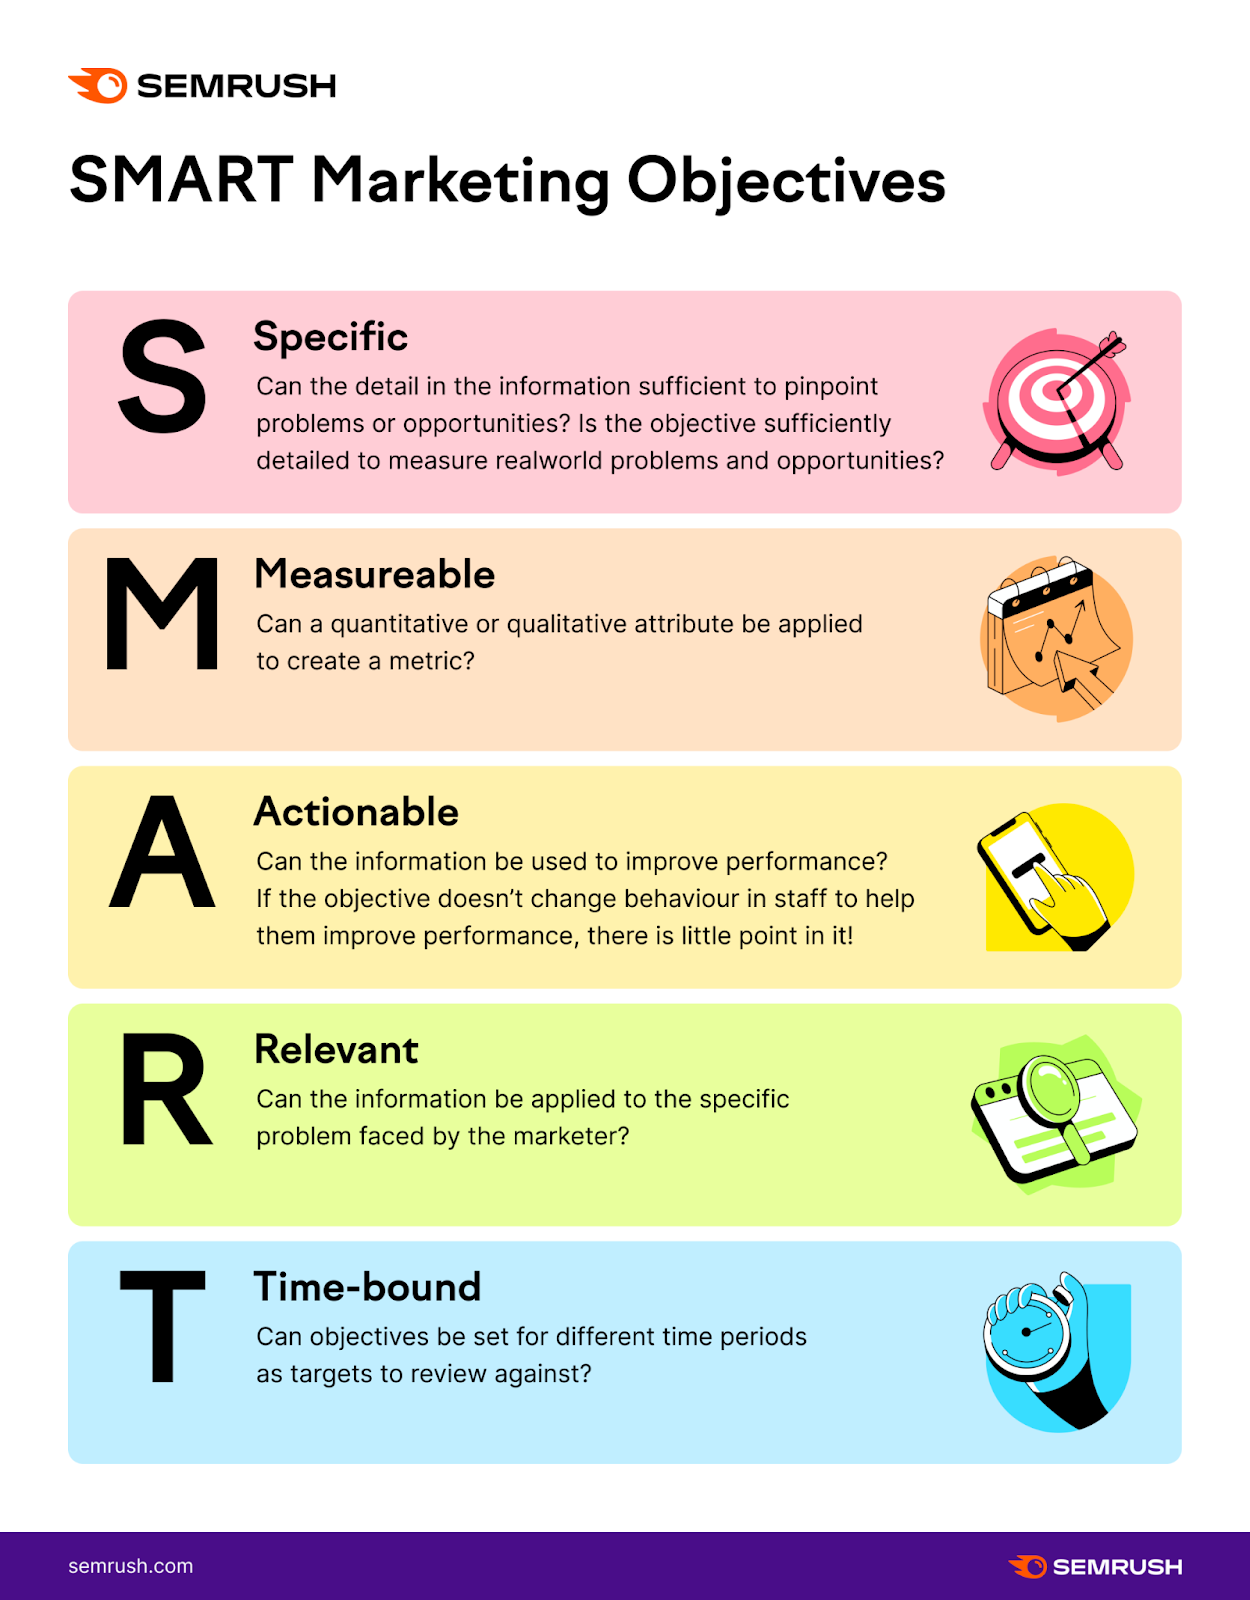 An infographic explaining "SMART" marketing objectives